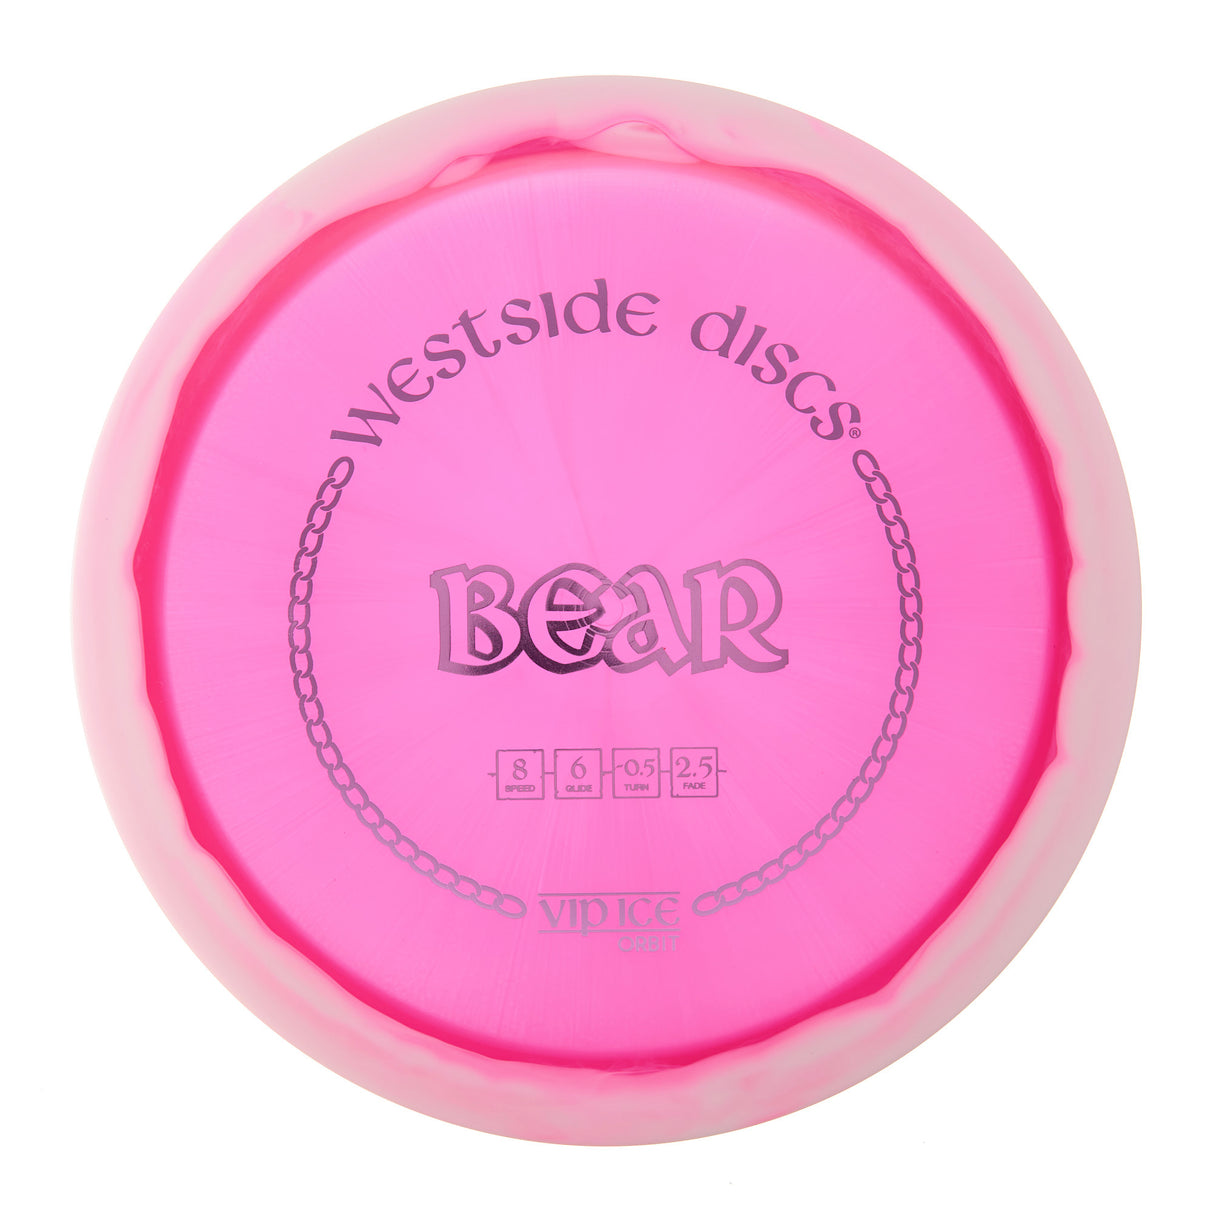 Westside Bear - VIP Ice Orbit 175g | Style 0013